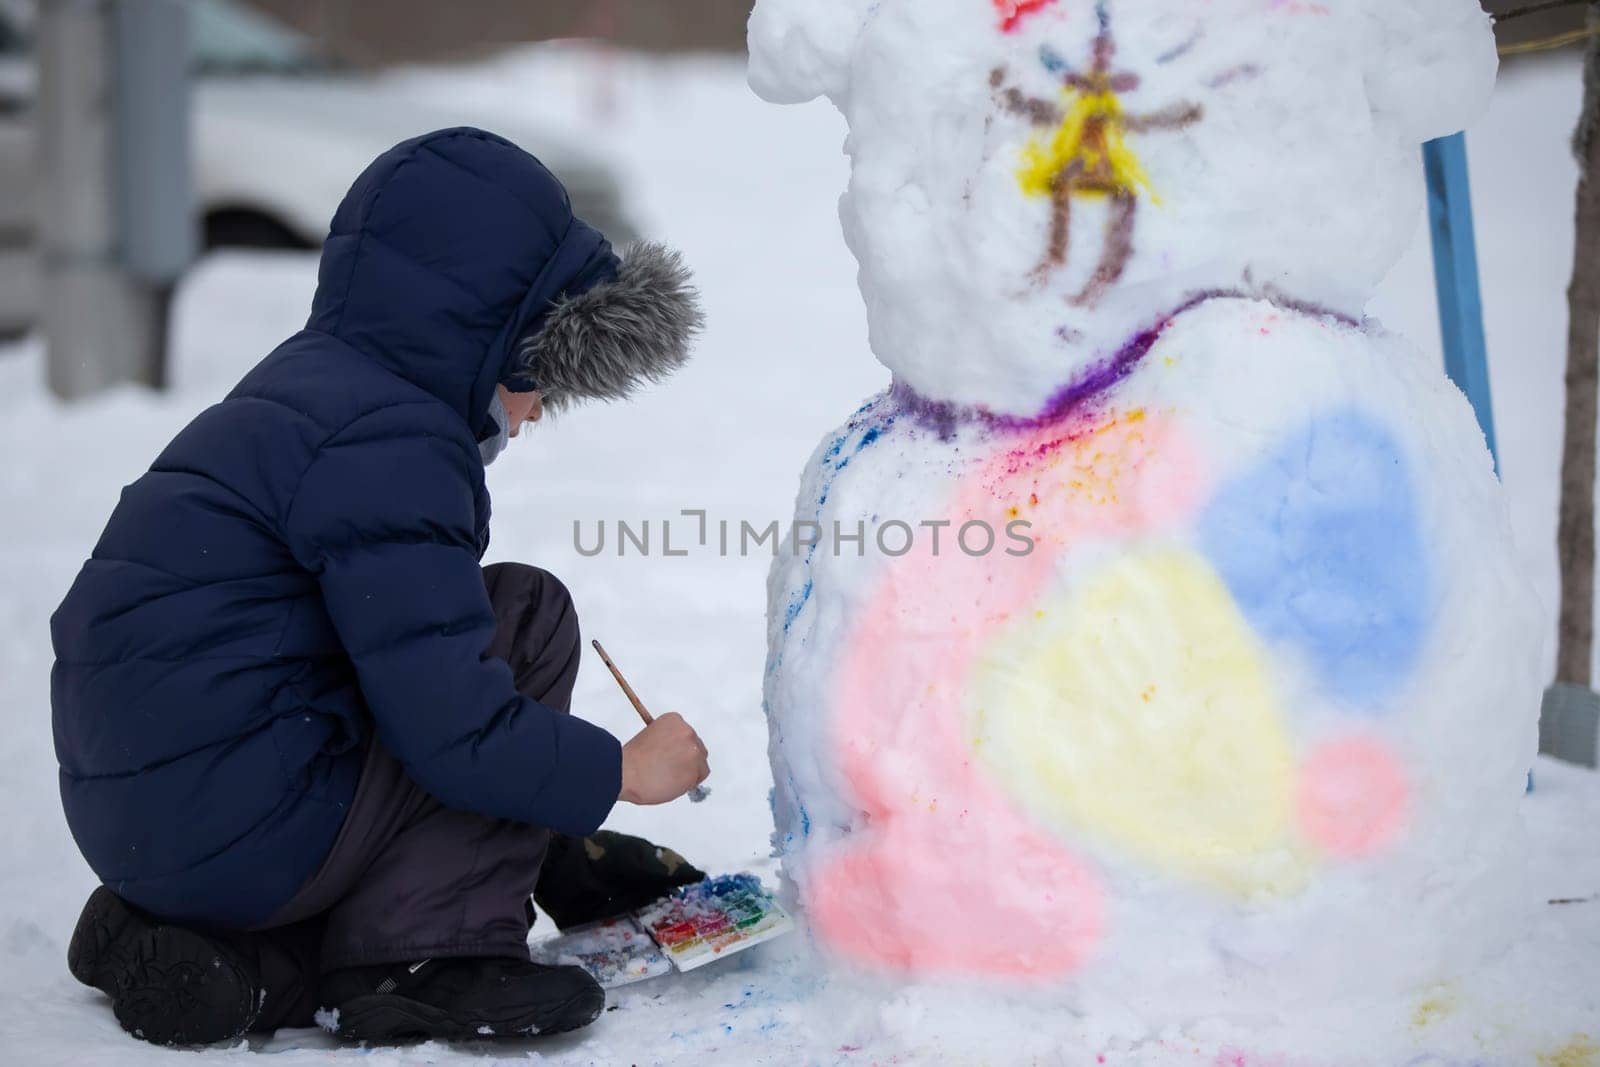 A boy paints a snowman on a winter day.